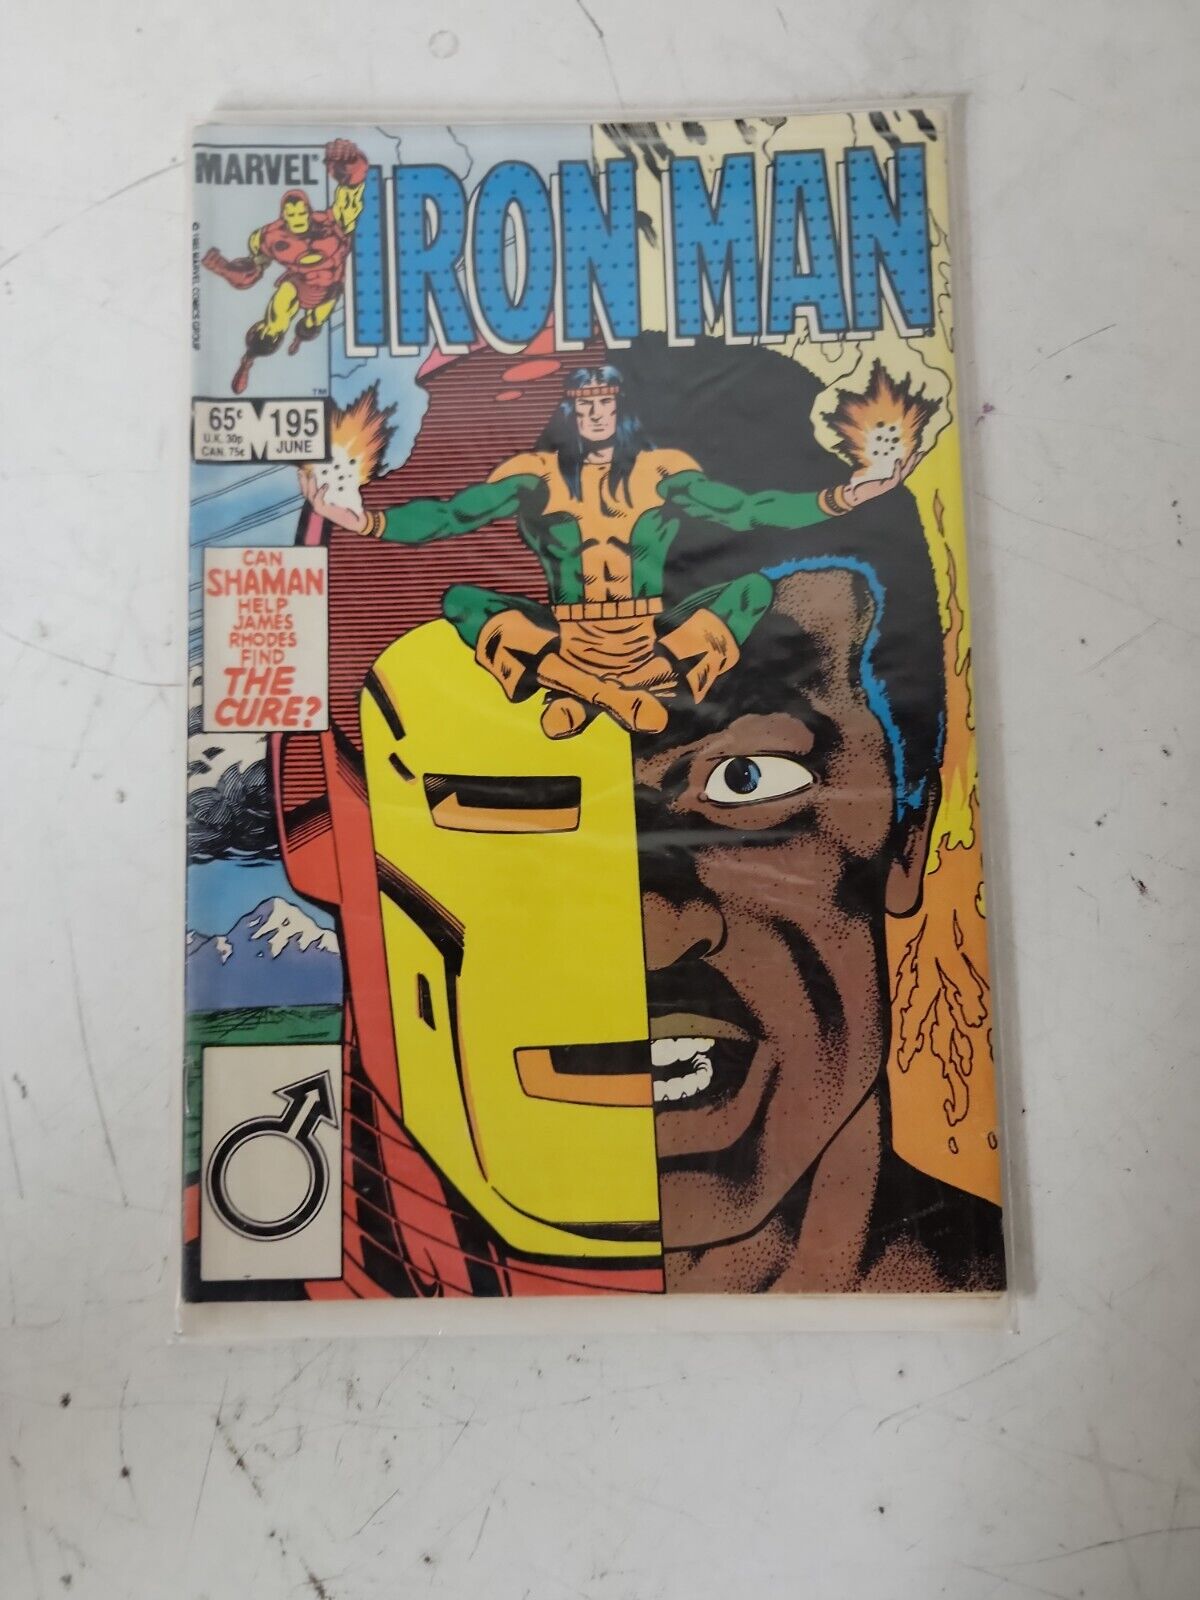 Iron Man #195 Direct